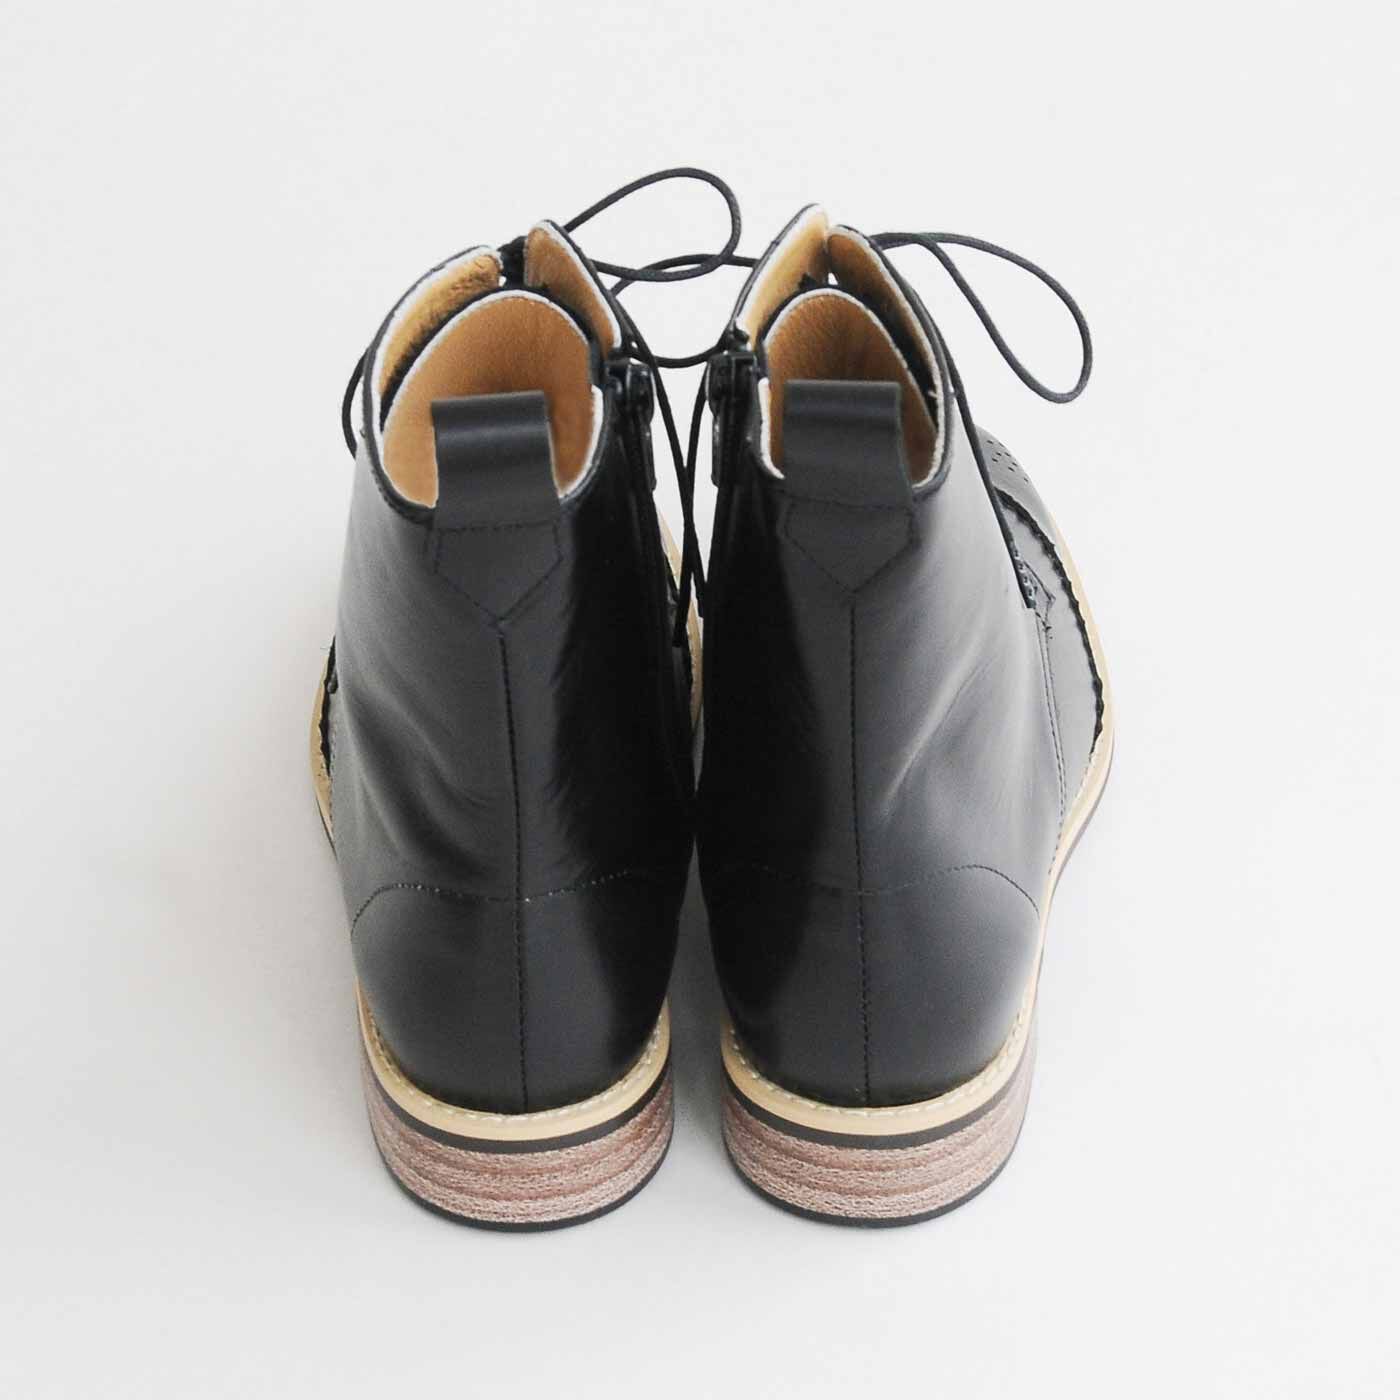 ＆Stories|長田靴職人が叶えた 理想の本革ウィングチップブーツ〈クラシックブラック〉[本革 ブーツ：日本製]